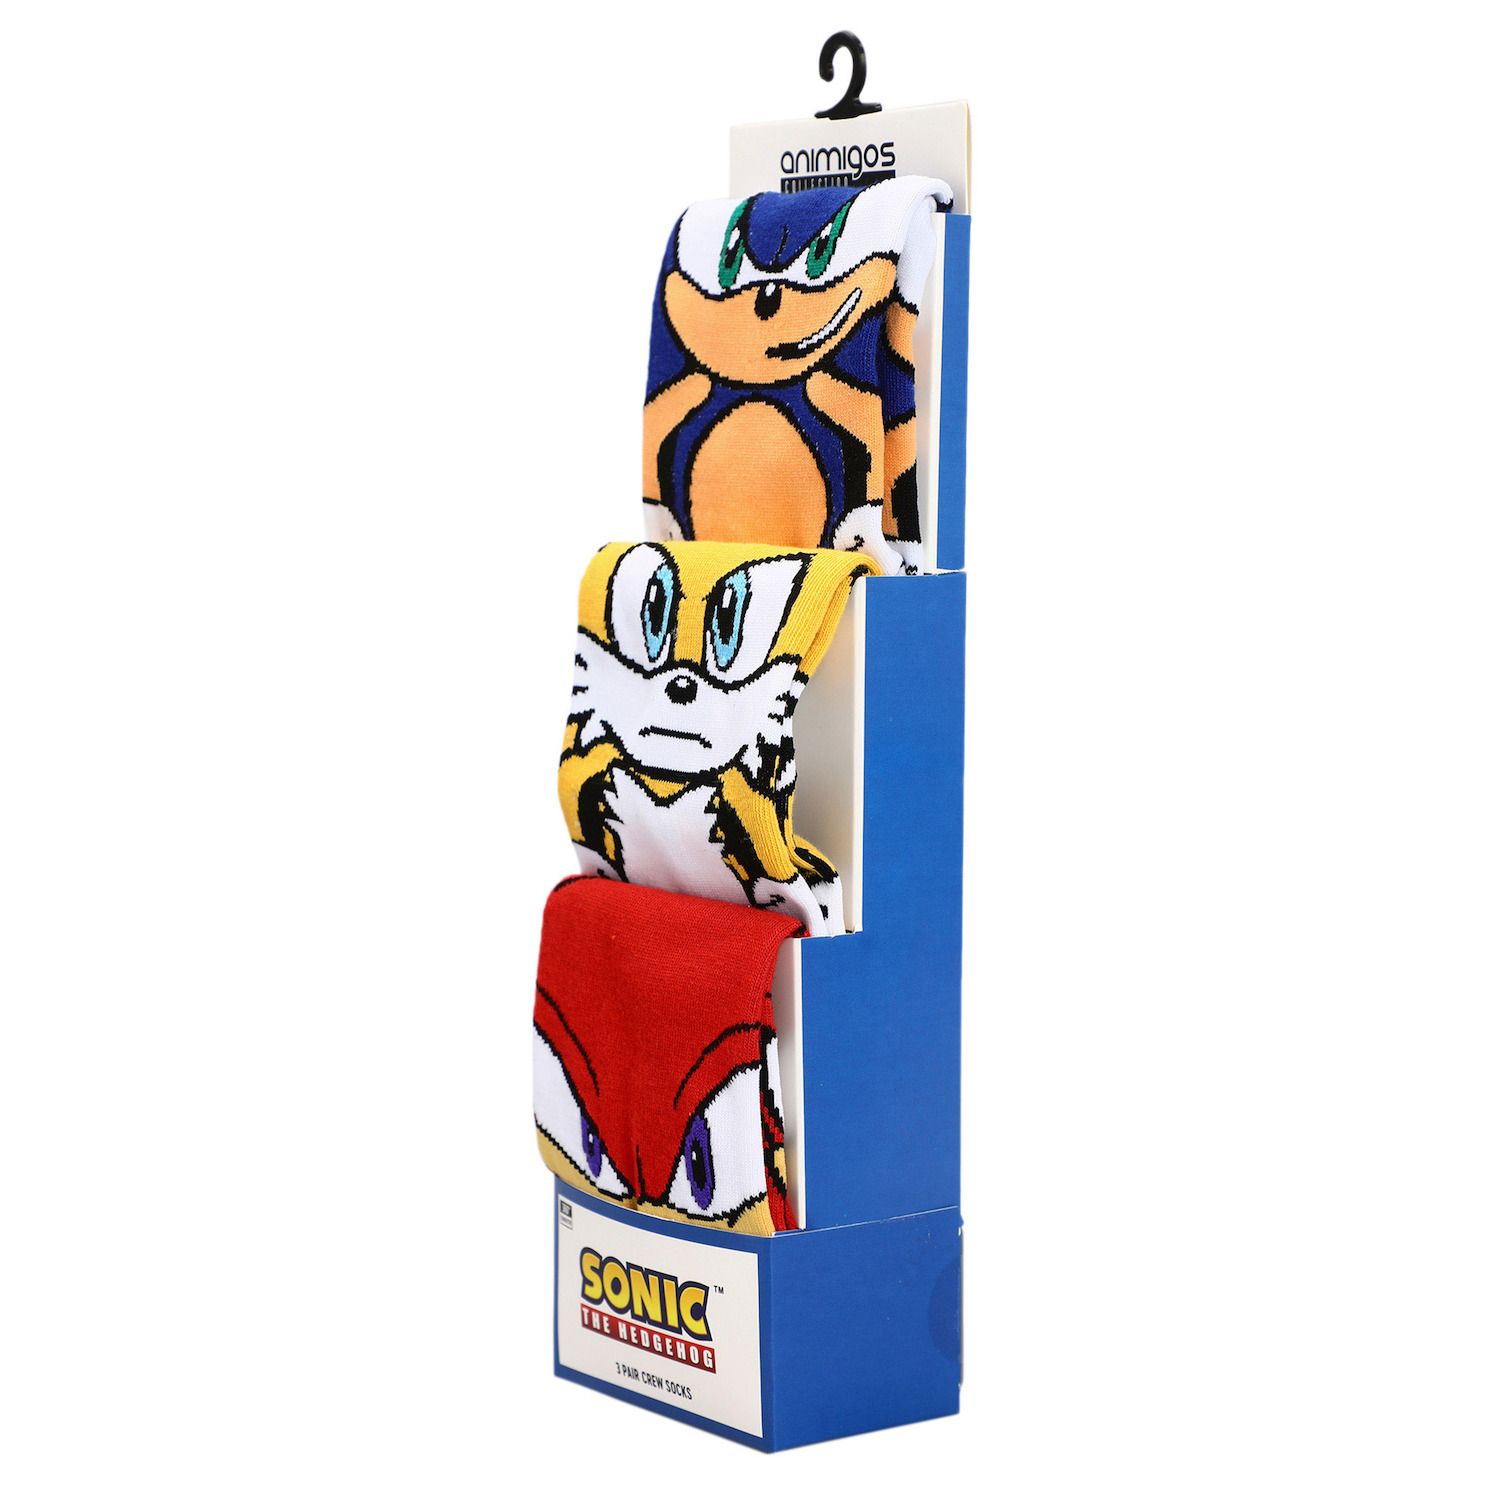 Мужские носки Sonic Hedgehog, 3 пары носков для экипажа Licensed Character новинки мужских носков для экипажа licensed character